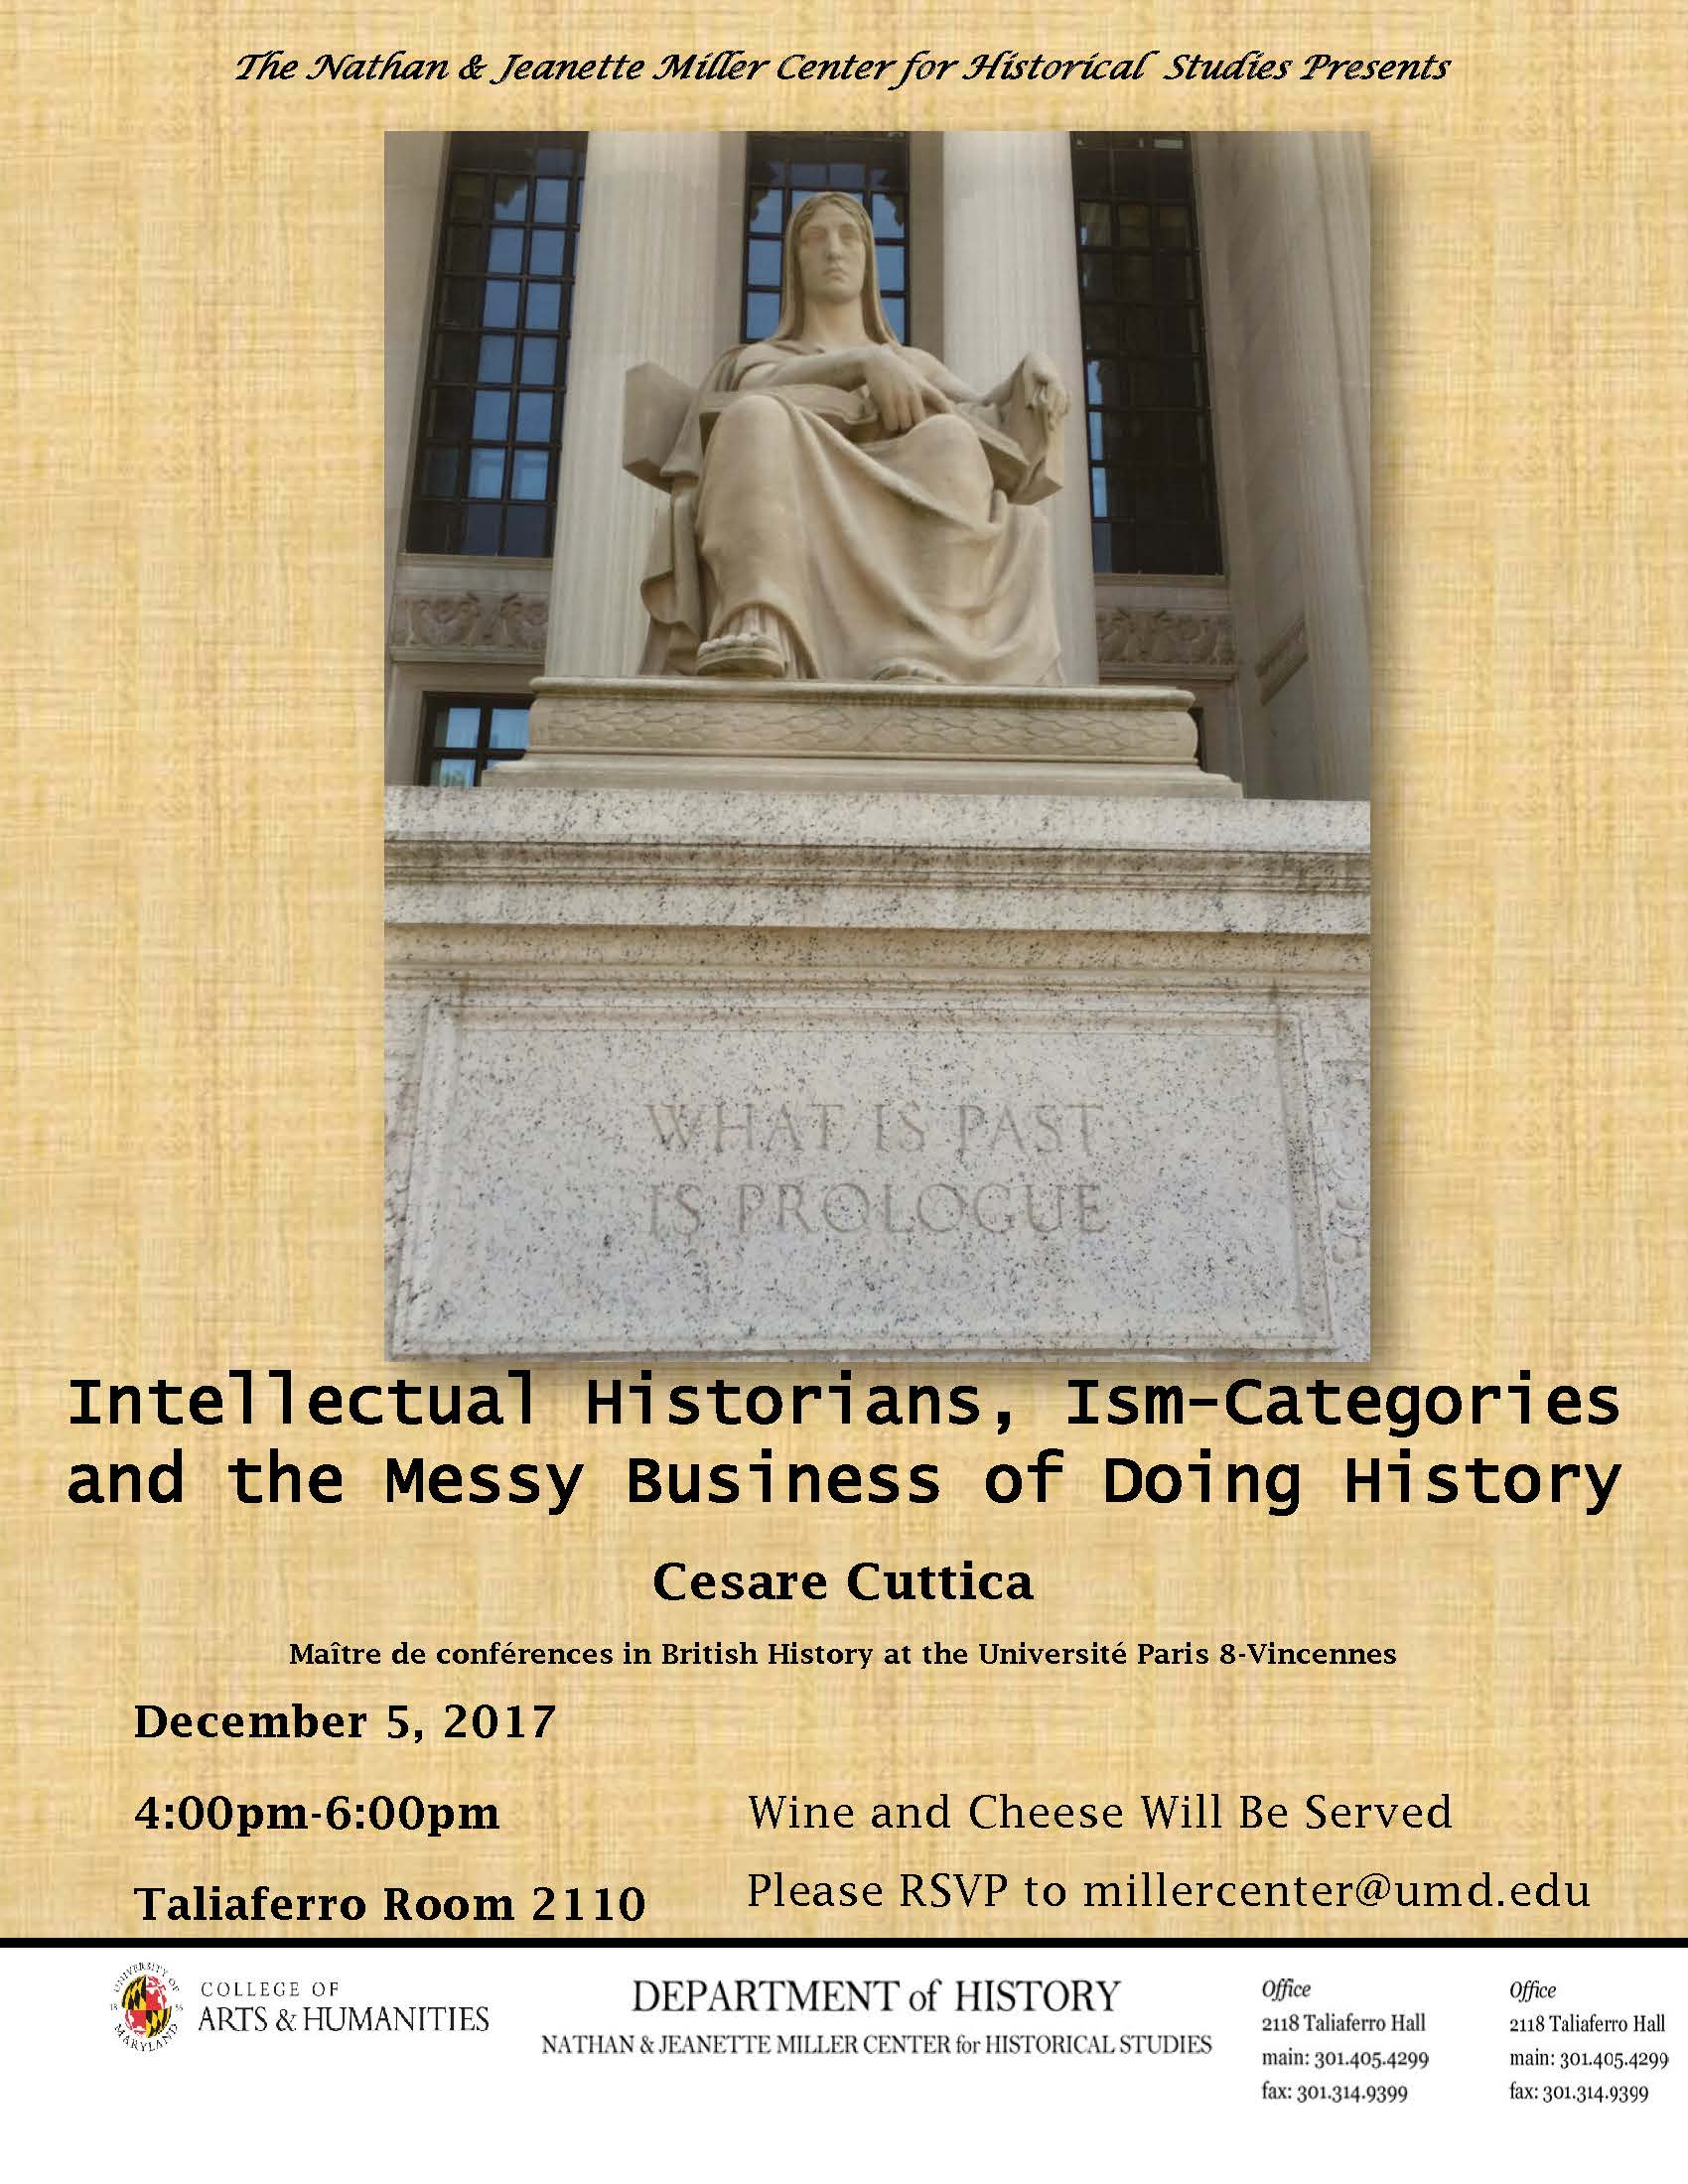 Image for event - Cuttica's "Intellectual Historians"